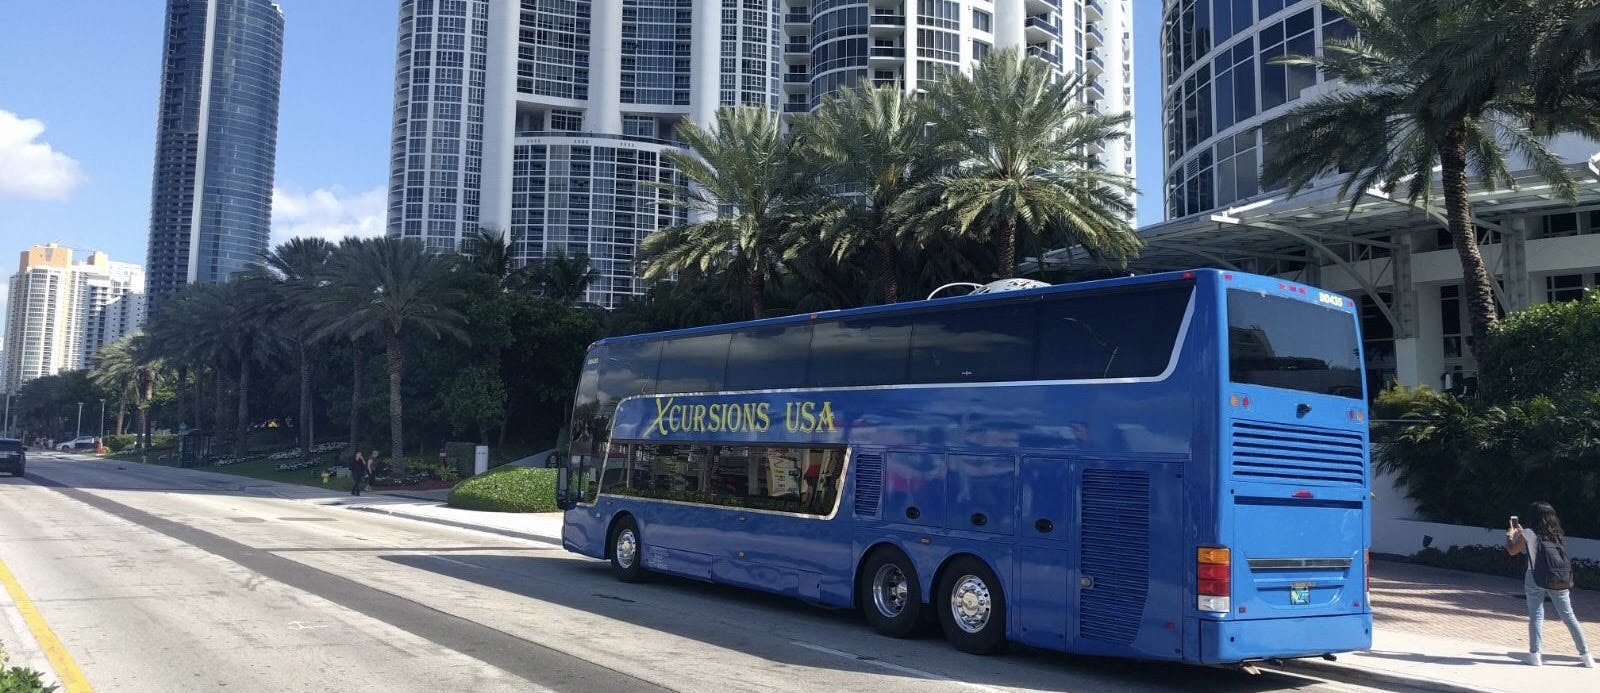 Miami to Key West bus tour Musement